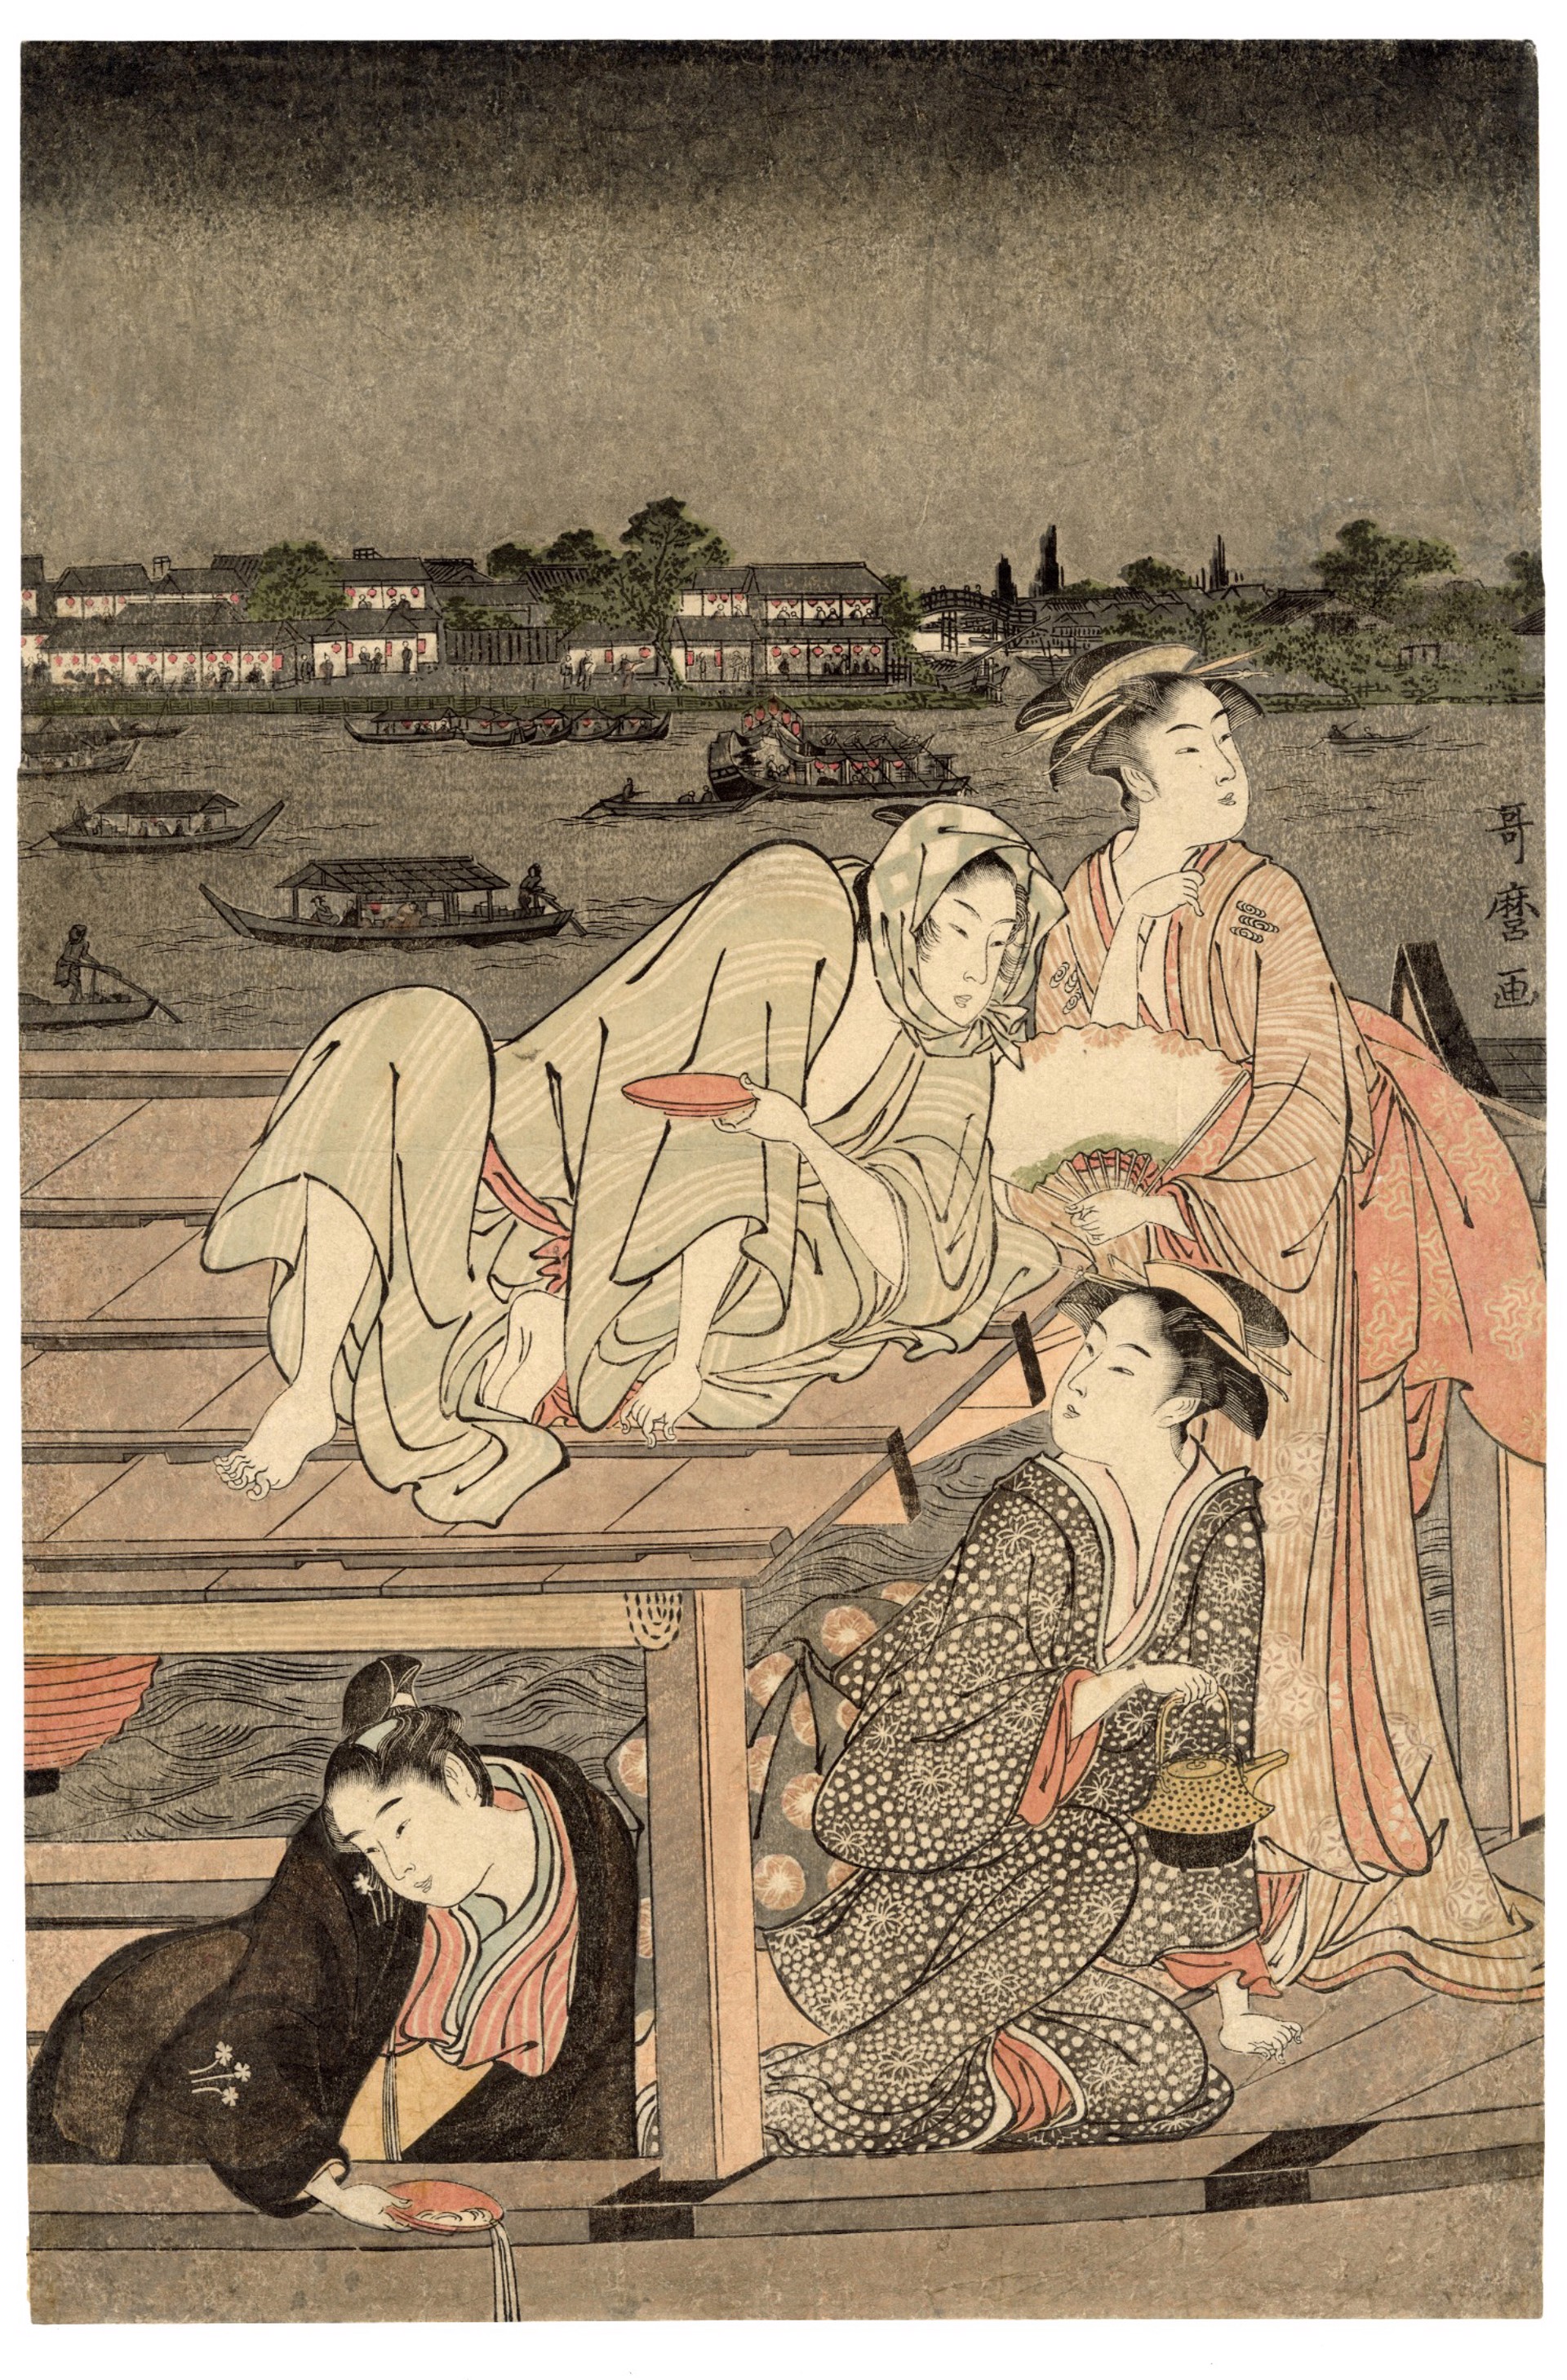 Pleasure Boating on the Sumidagawa by Utamaro